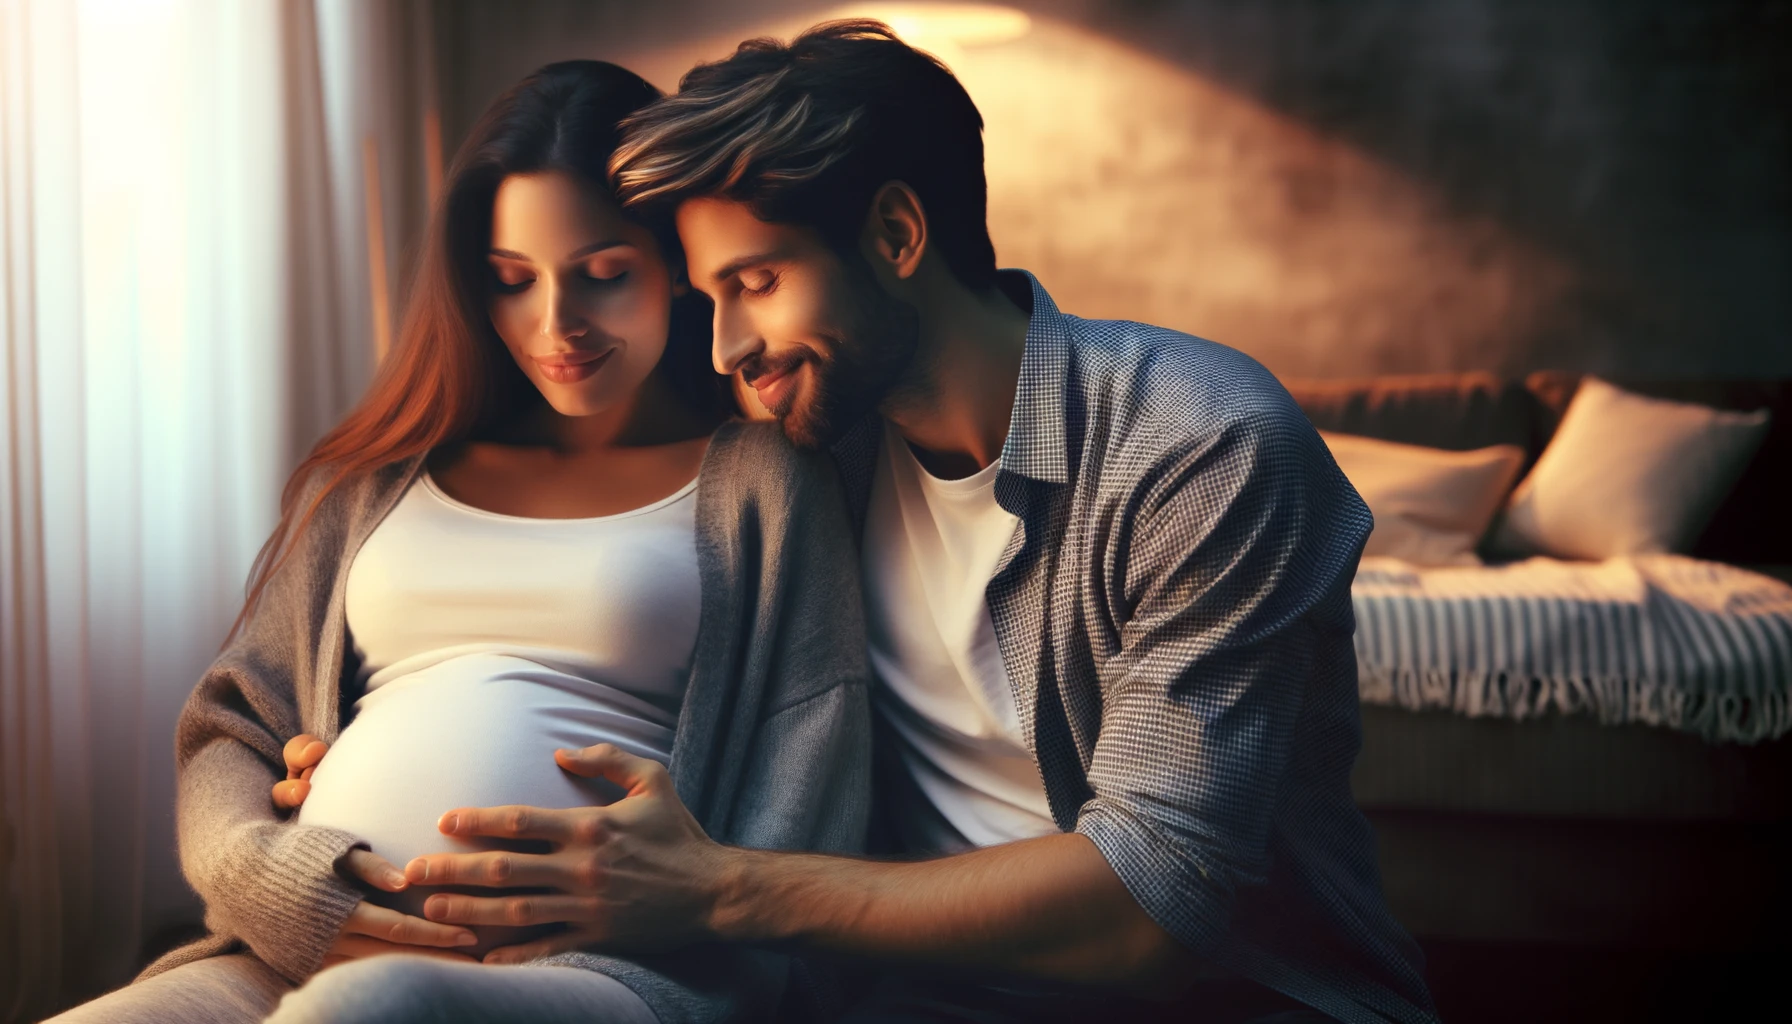 Bebektivite | Couvade Sendromu Nedir?